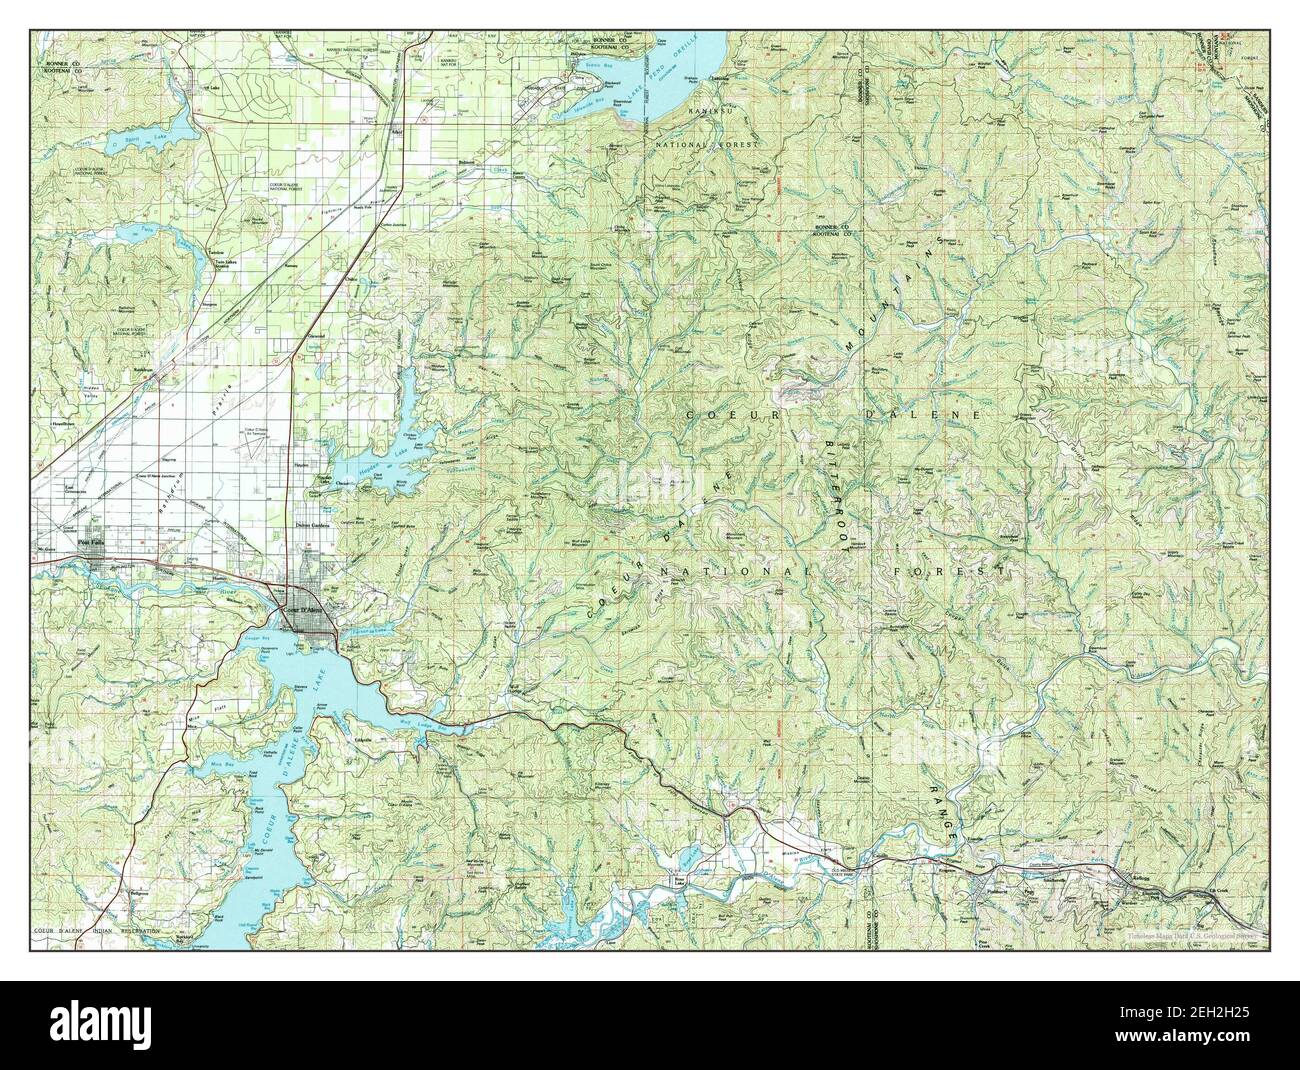 Coeur DAlene, Idaho, map 1987, 1:100000, United States of America by Timeless Maps, data U.S. Geological Survey Stock Photo